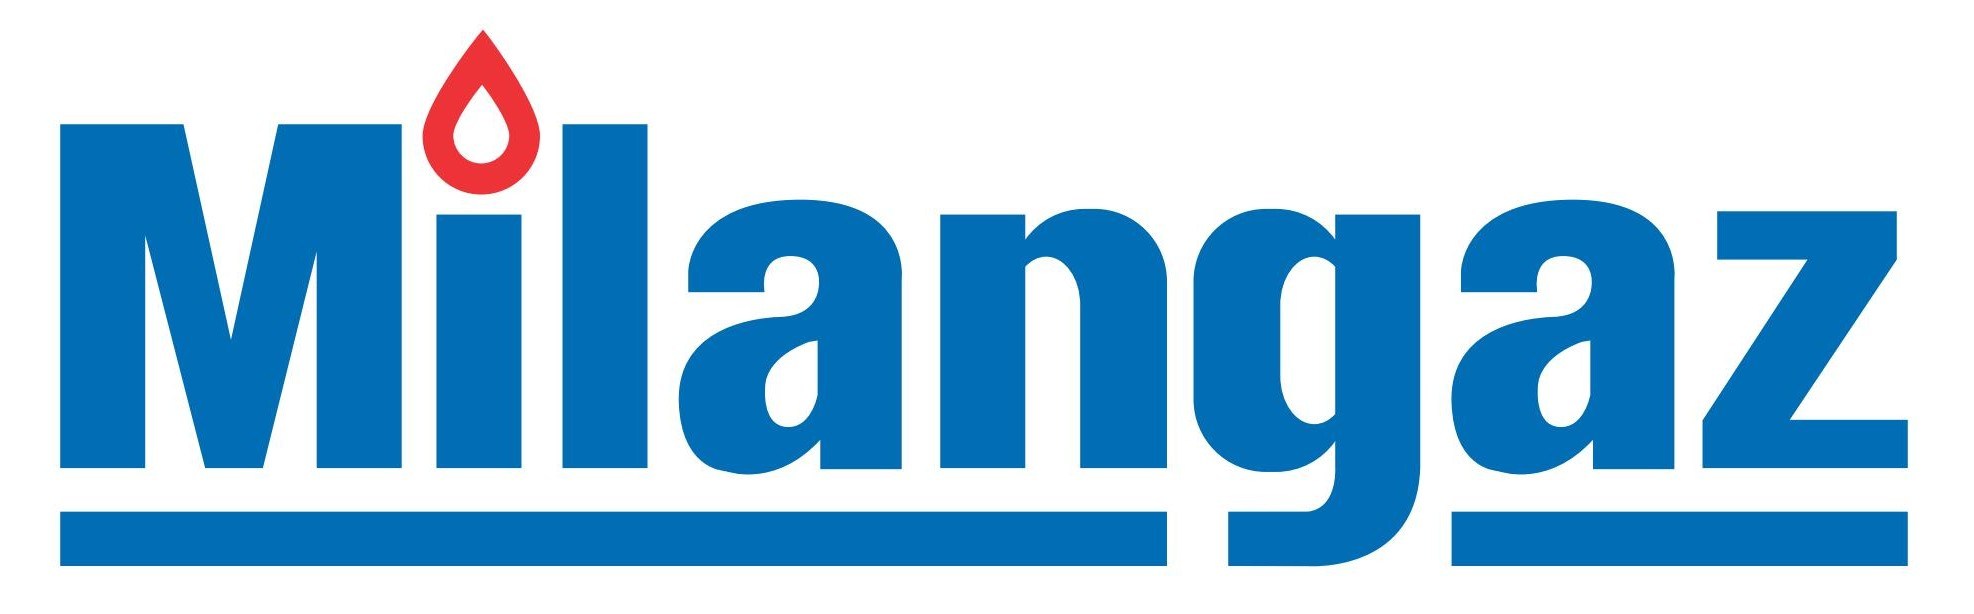 Milangaz Logo [EPS File]